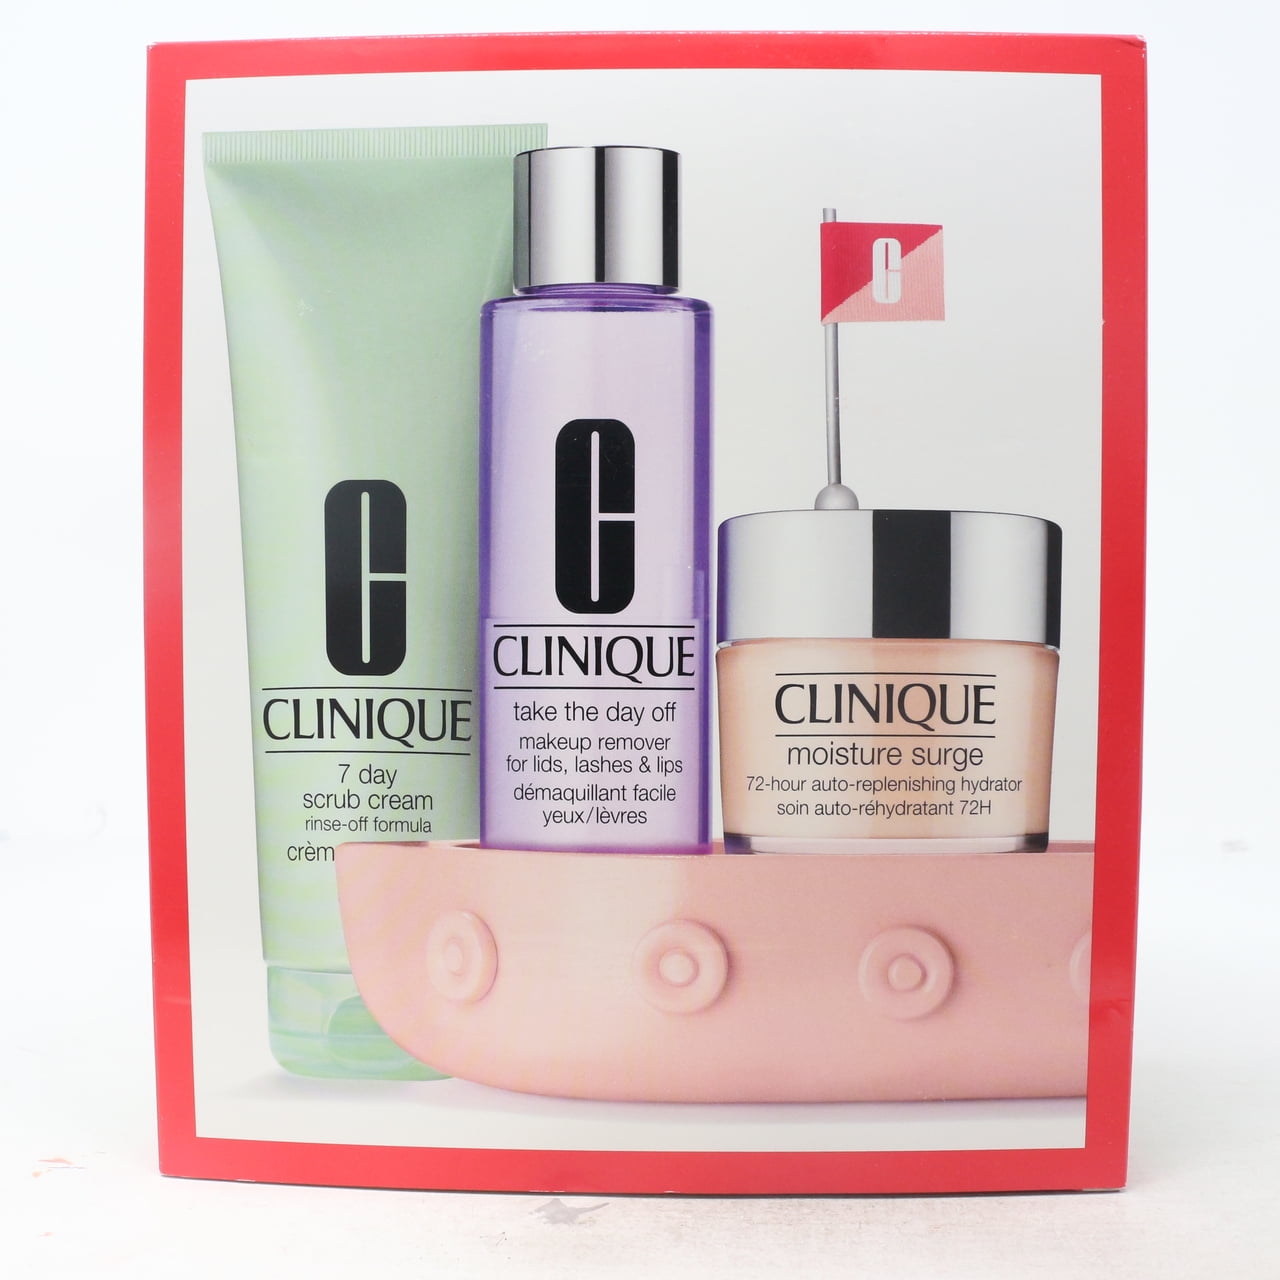 Clinique Super Skin Care Gift Set - Take the day off makeup Moisture surge 72hr hydrator - 7 day Scrub Cream - Walmart.com